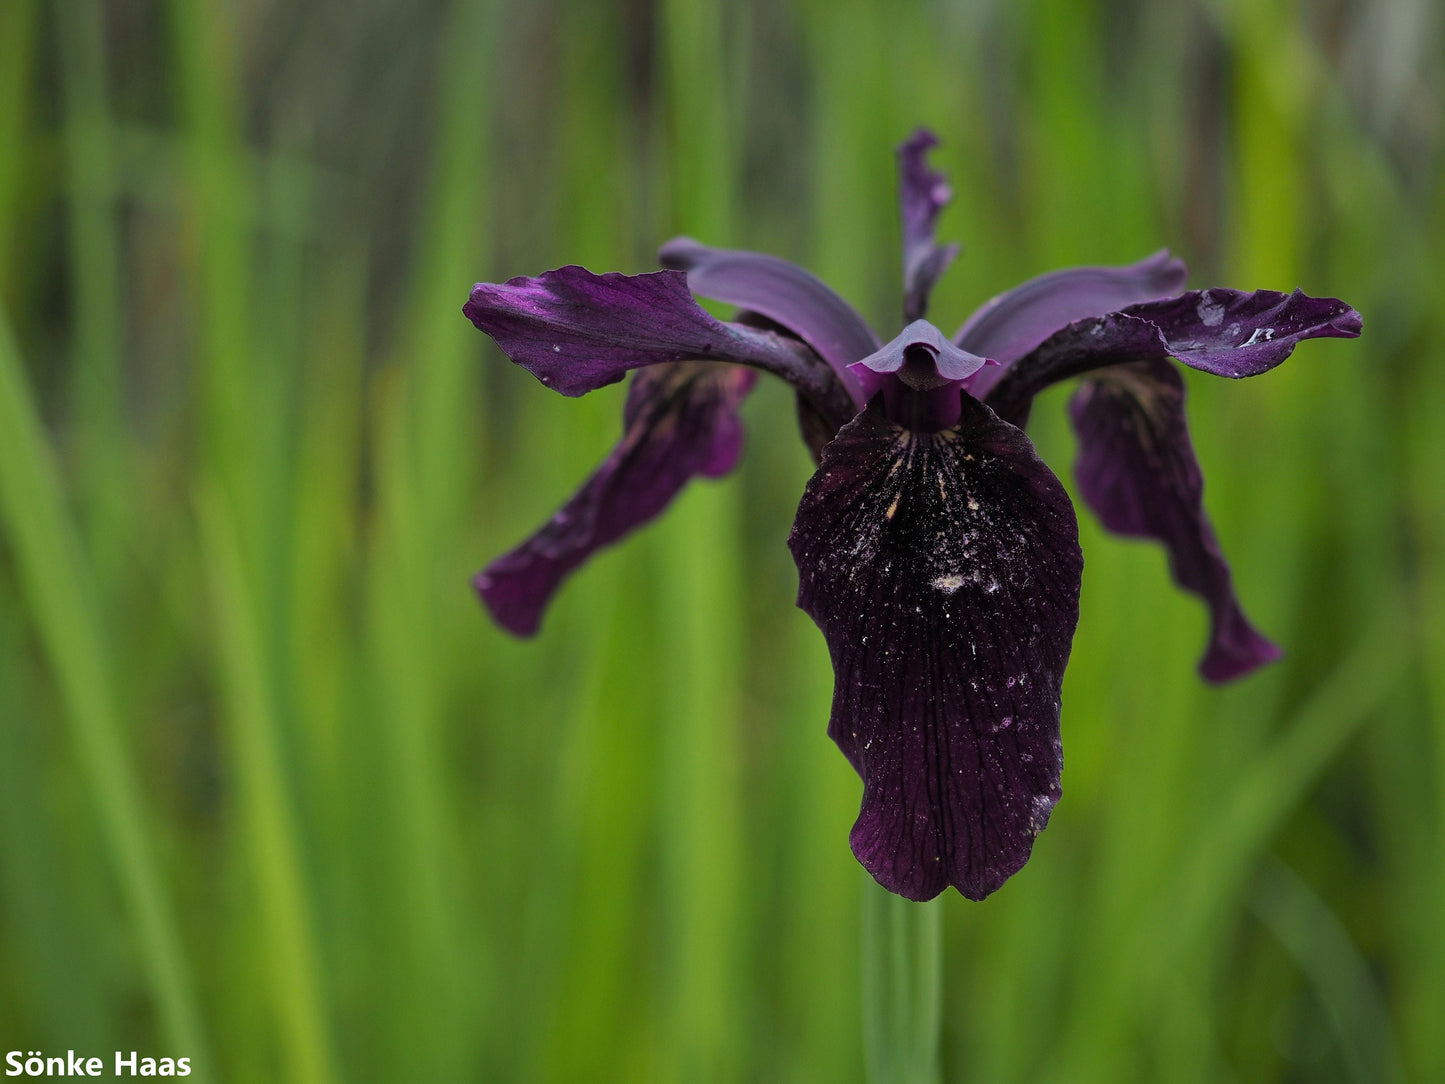 Iris Chrysographes - The Black Beauty Iris Flower - True Black Knight Iris - 5 Seeds